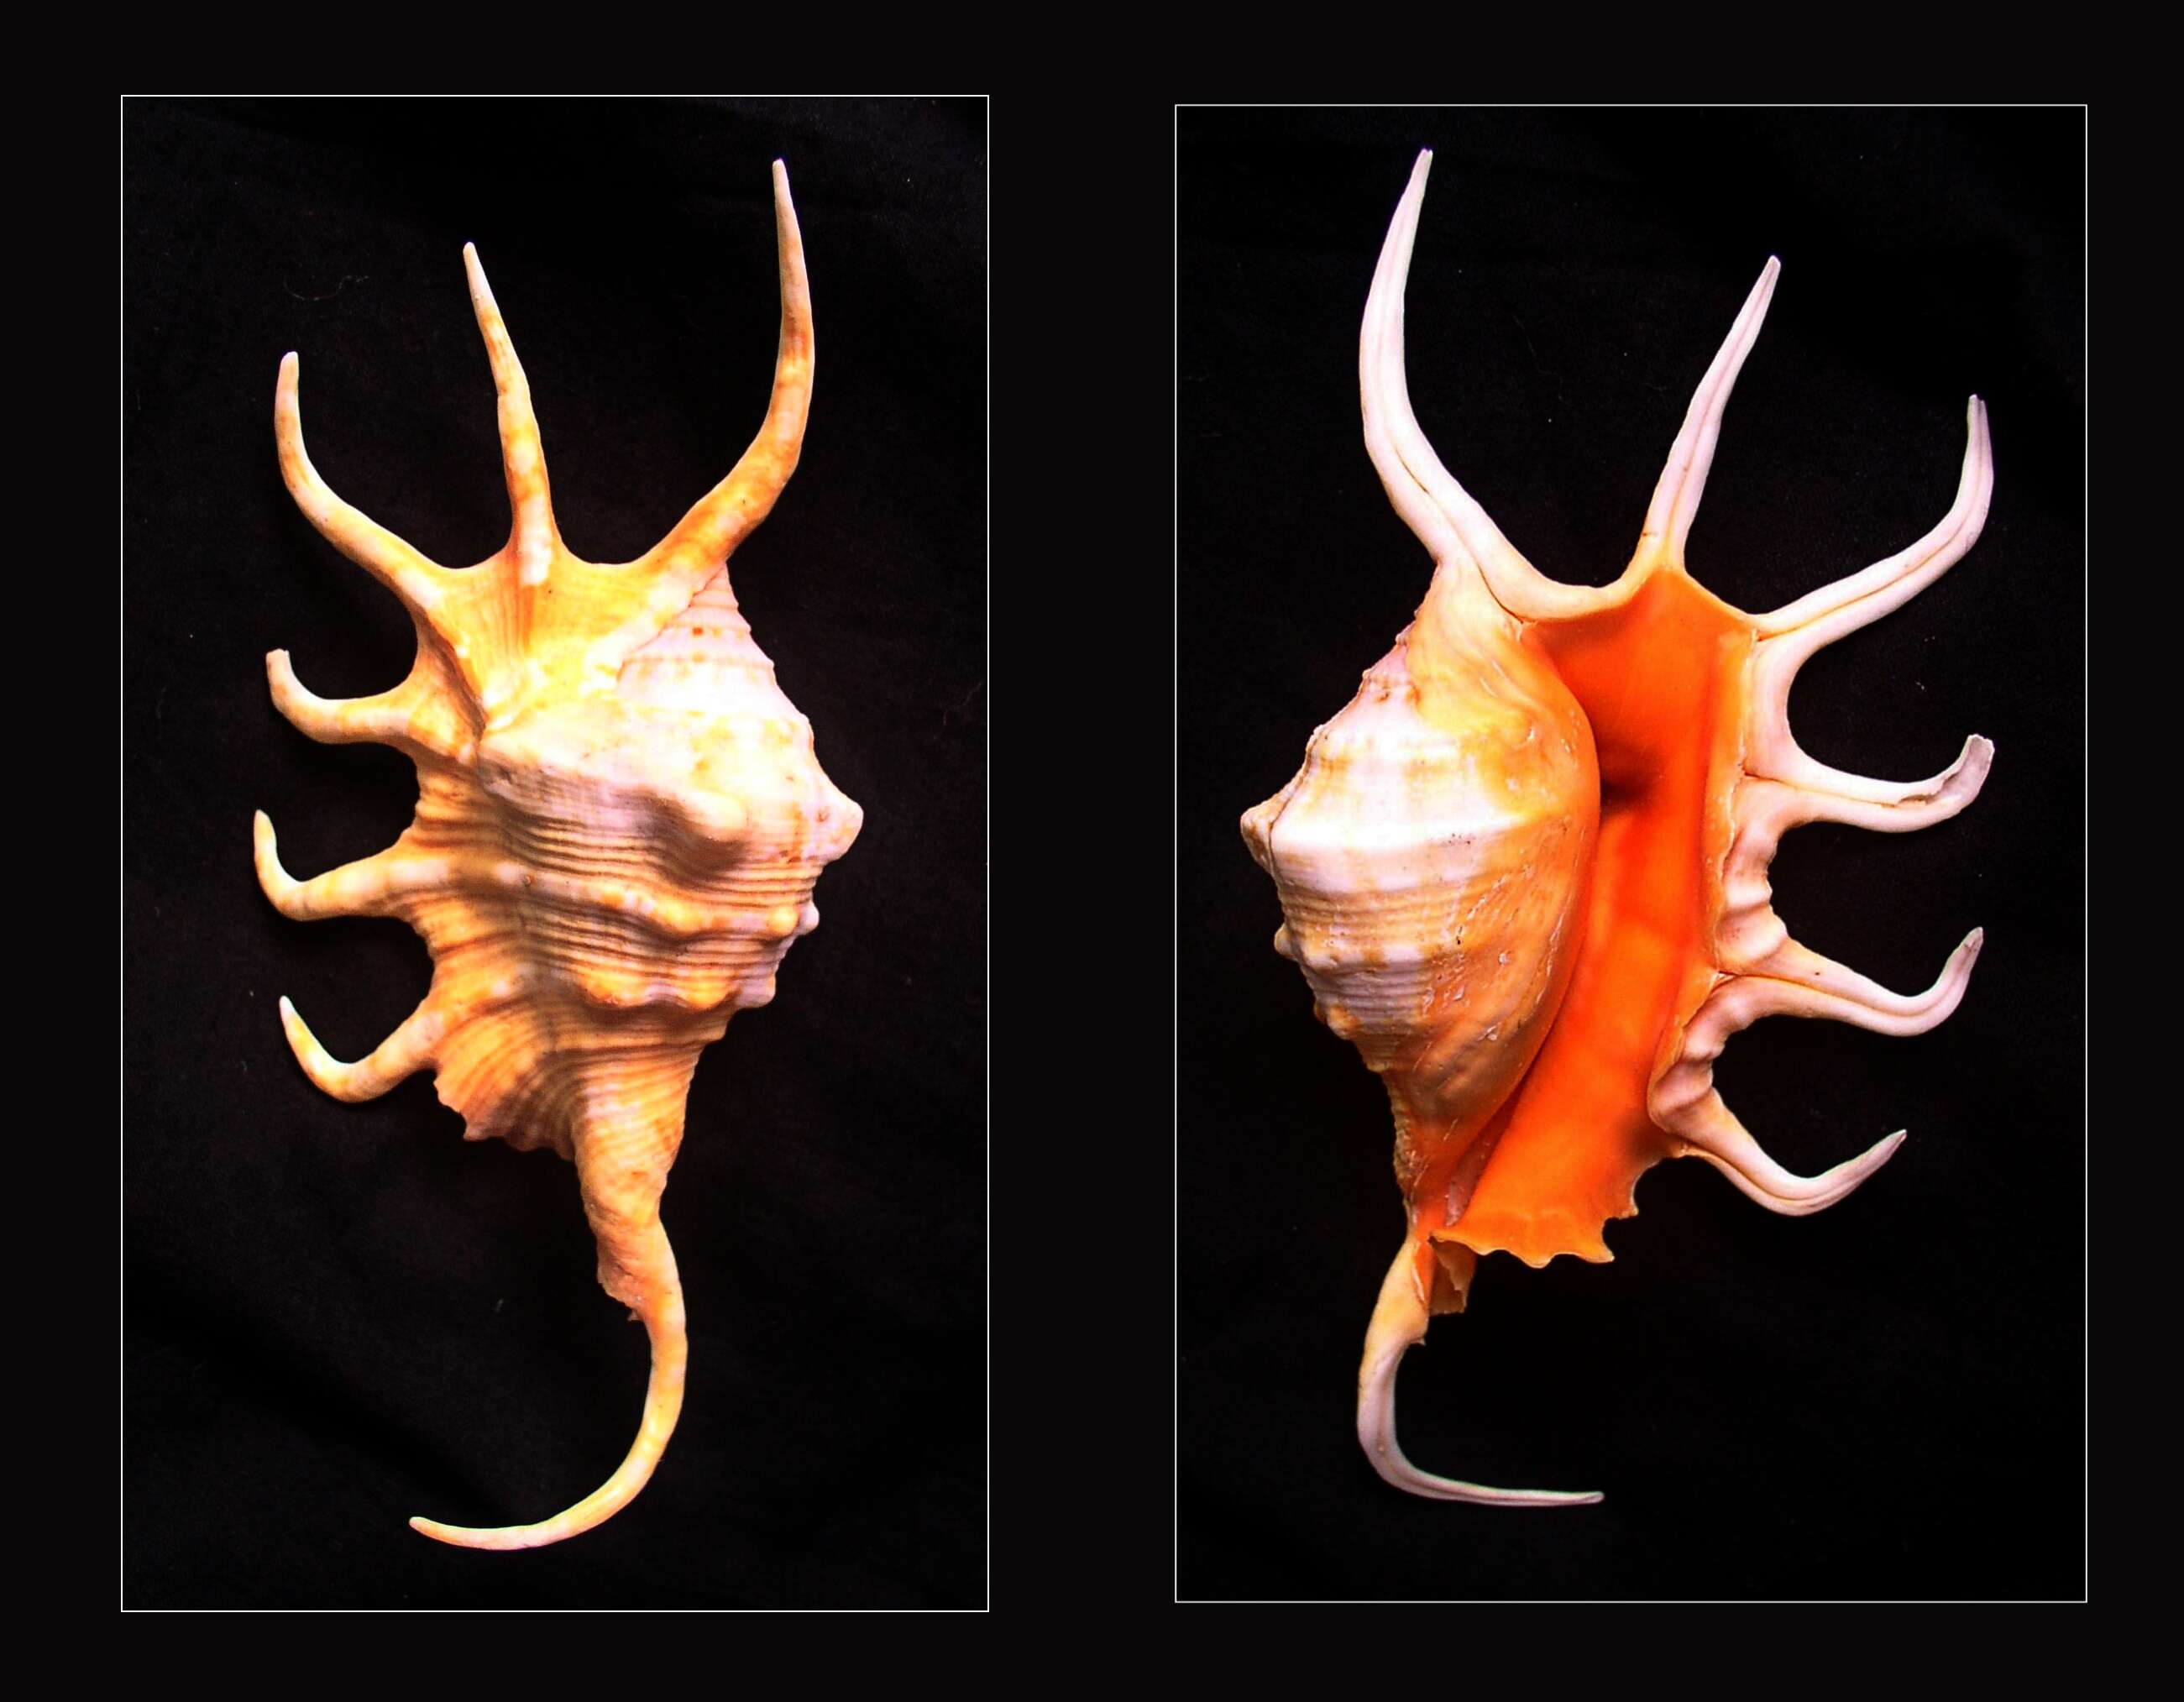 Image of orange spider conch